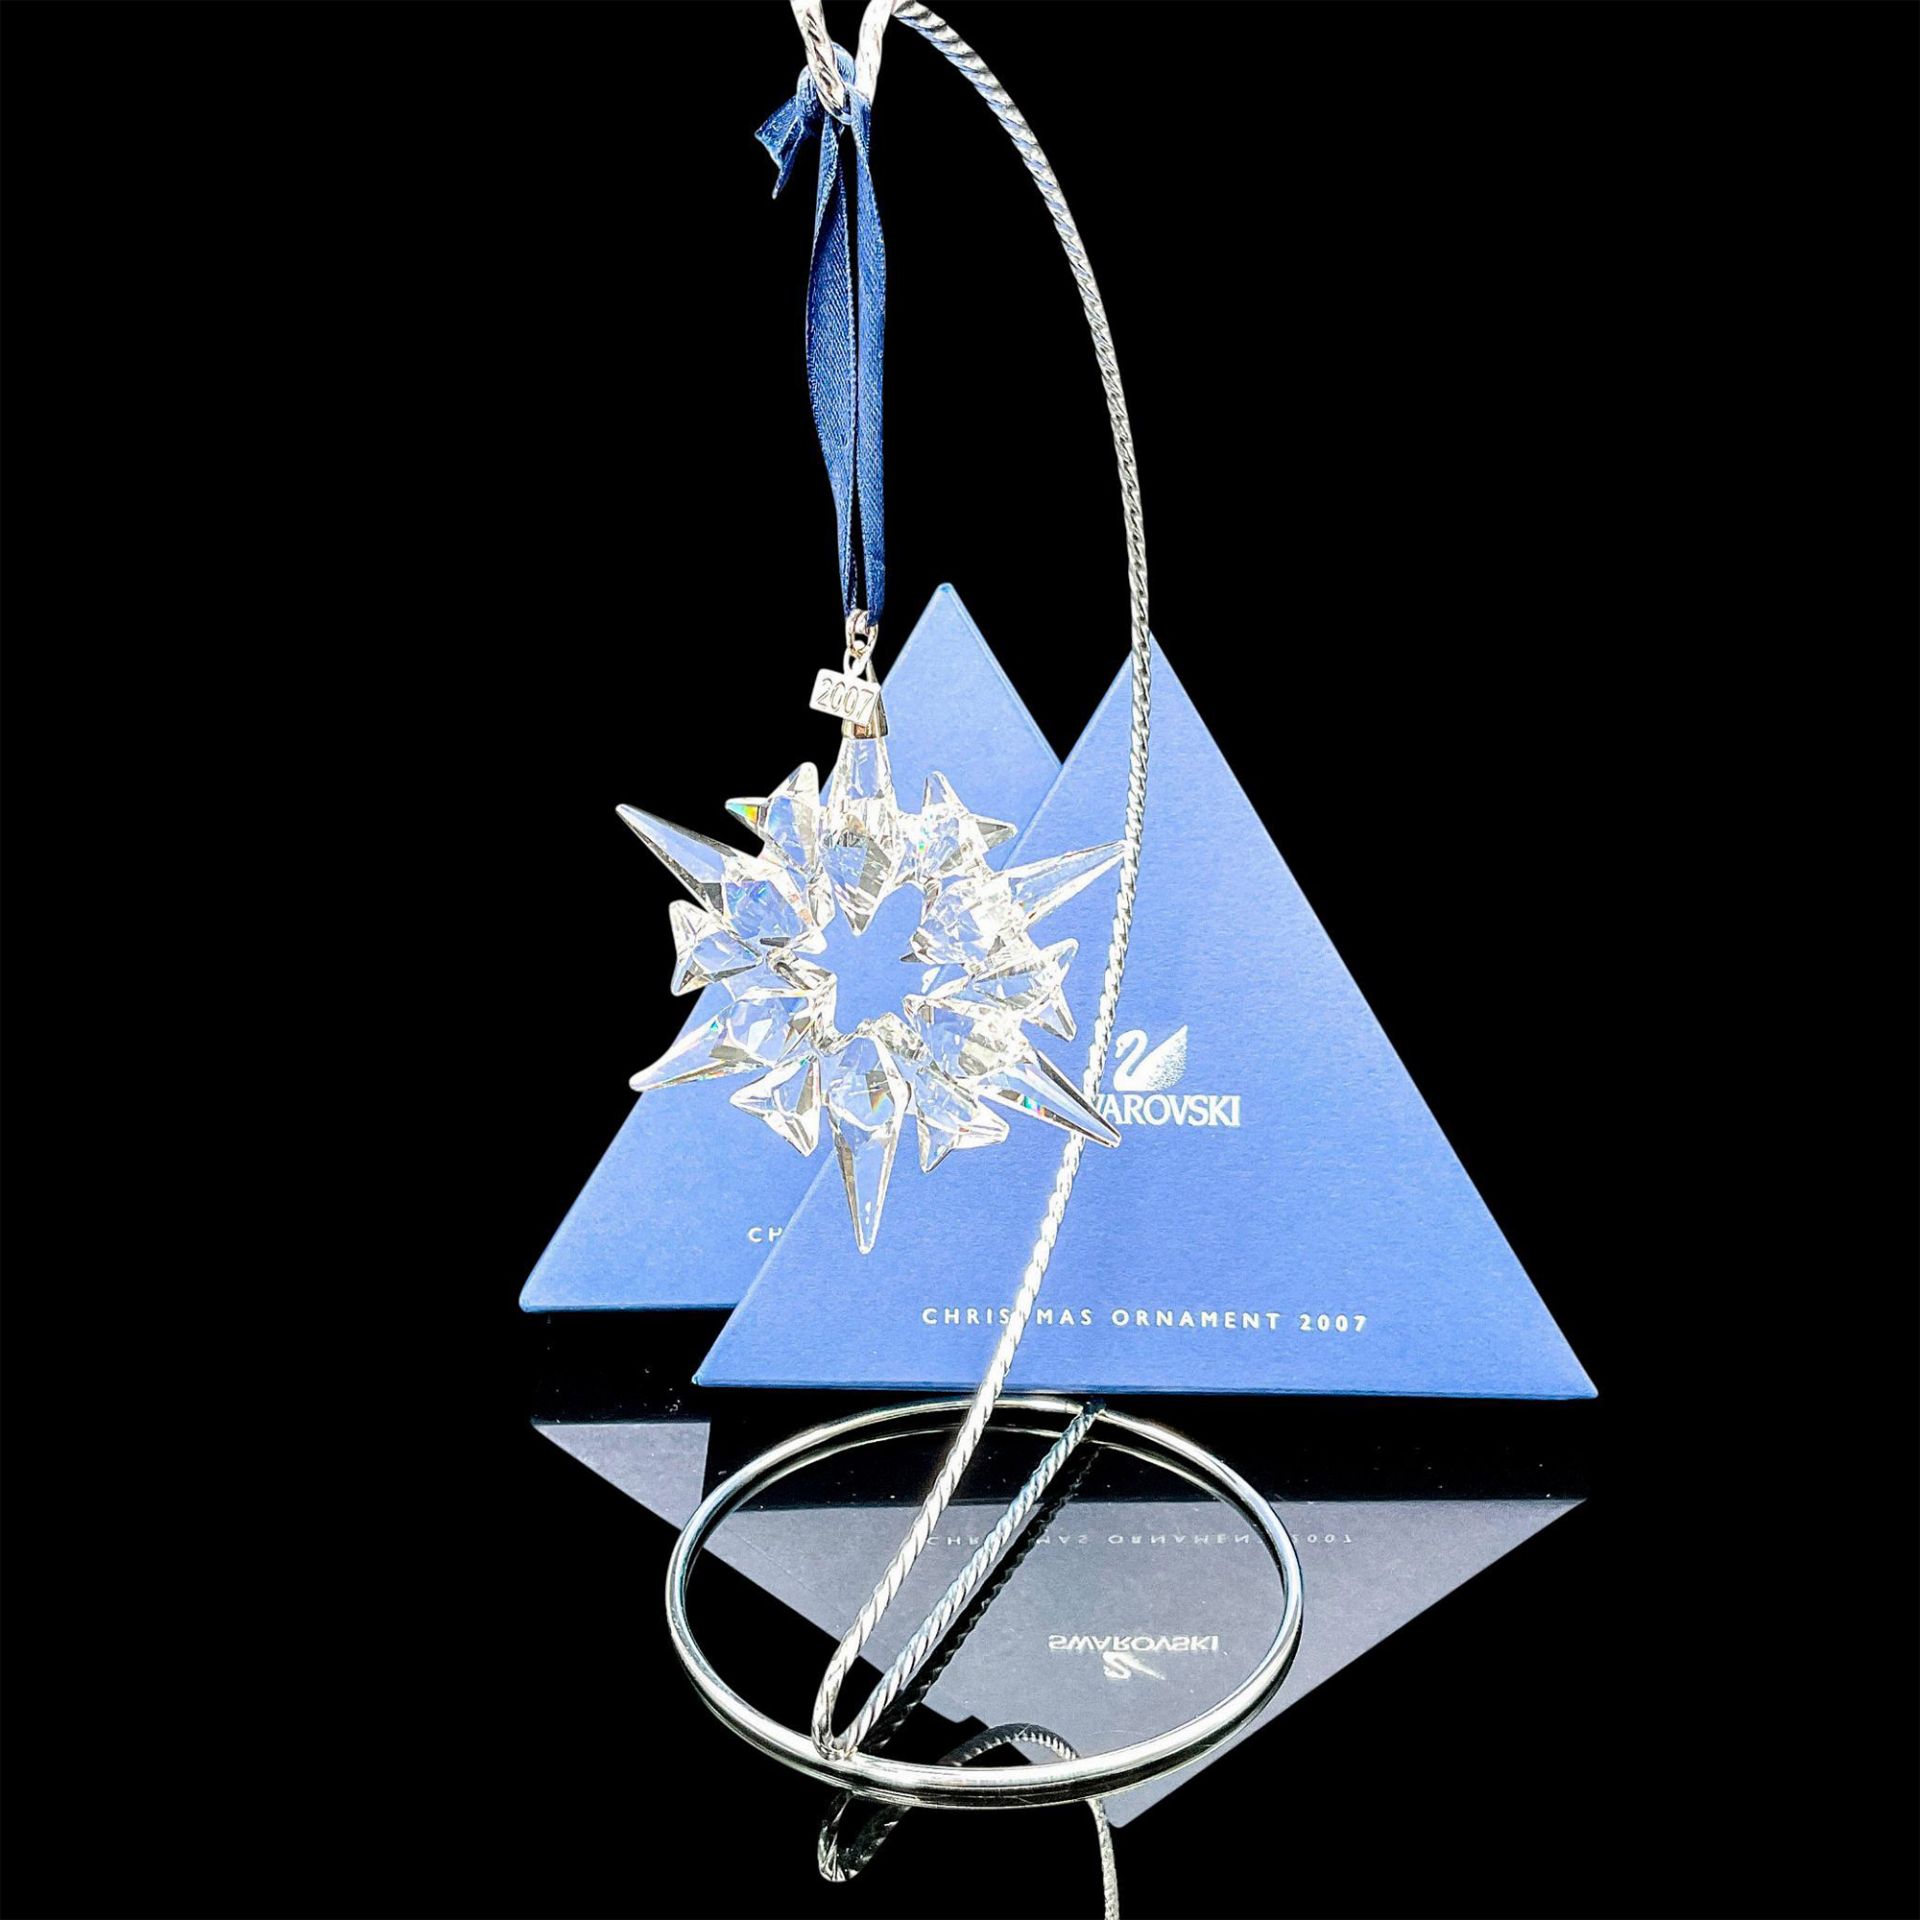 Swarovski Crystal Ornament, Christmas Star with Stand - Image 3 of 3